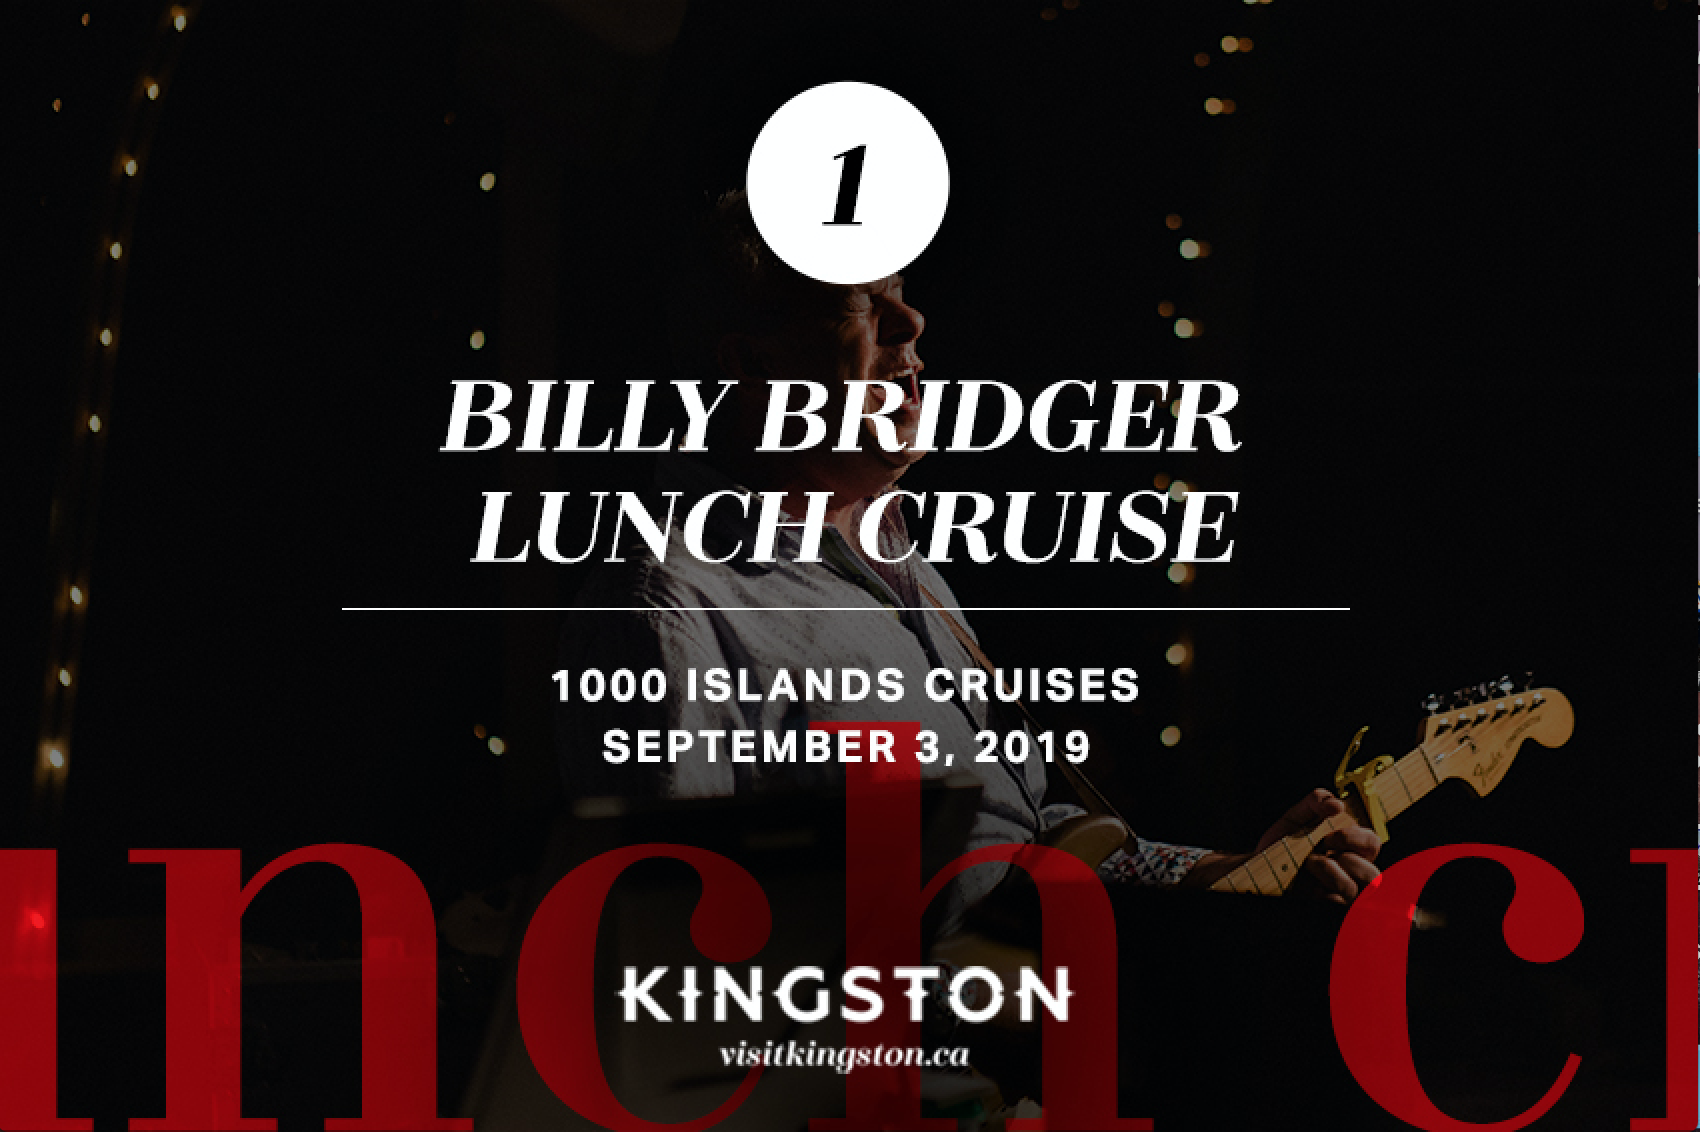 1. Billy Bridger Lunch Cruise: 1000 Islands Cruises - September 3, 2019